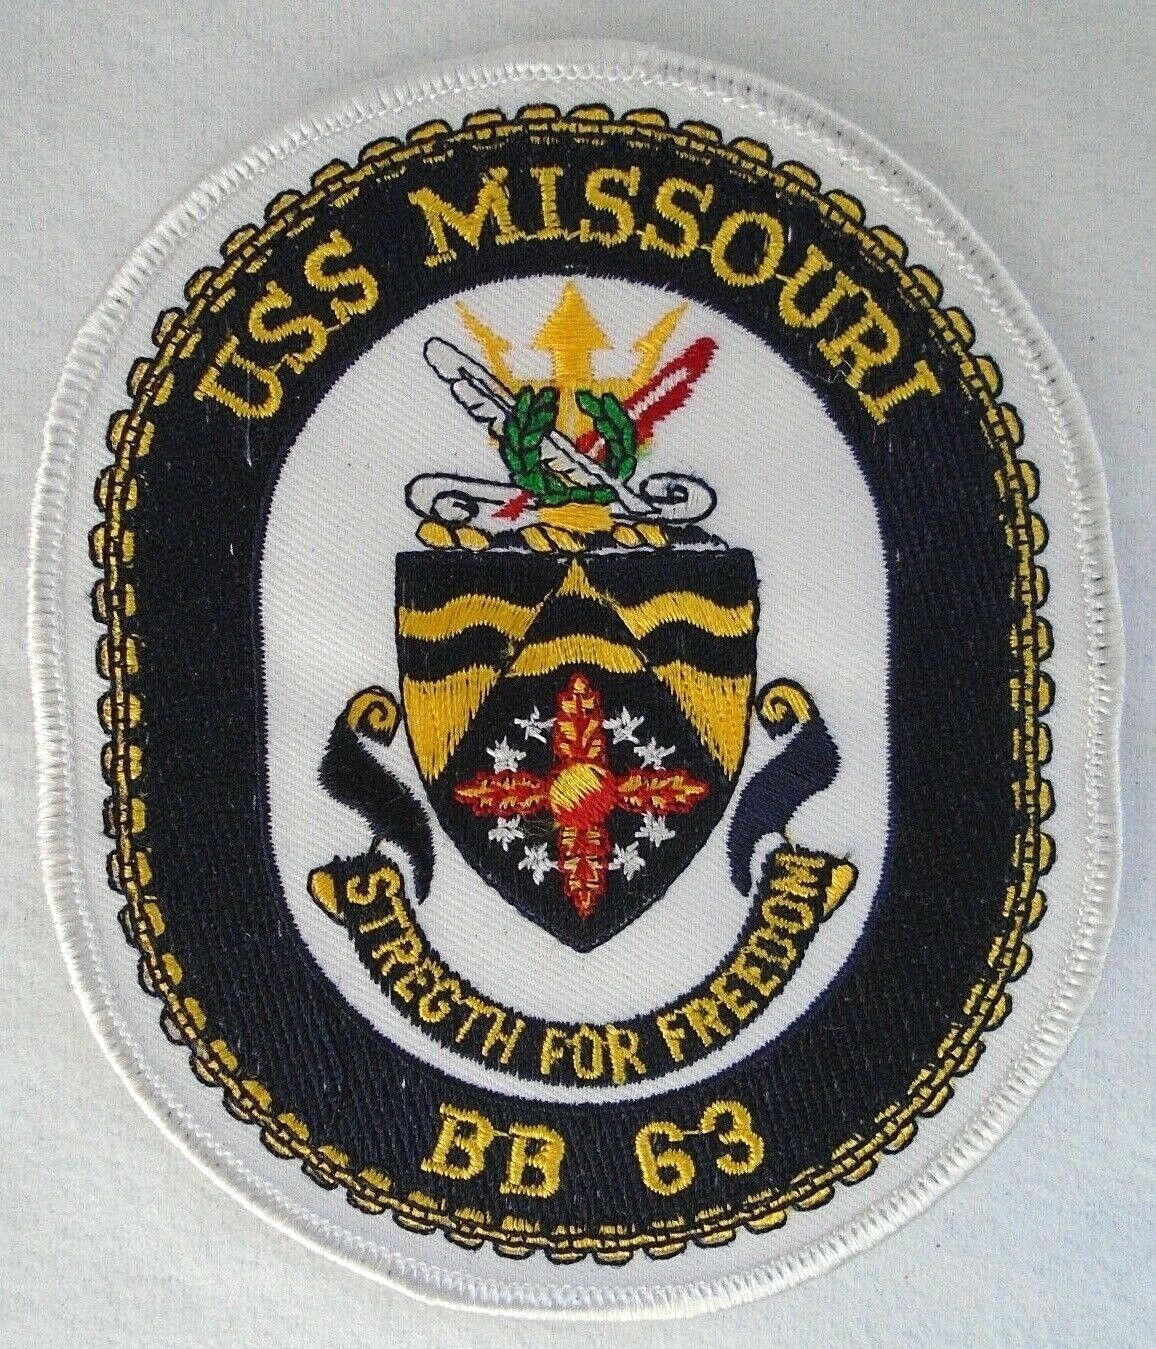 Vintage USS Missouri Strength for Freedom BB 63 US Navy Battleship Patch